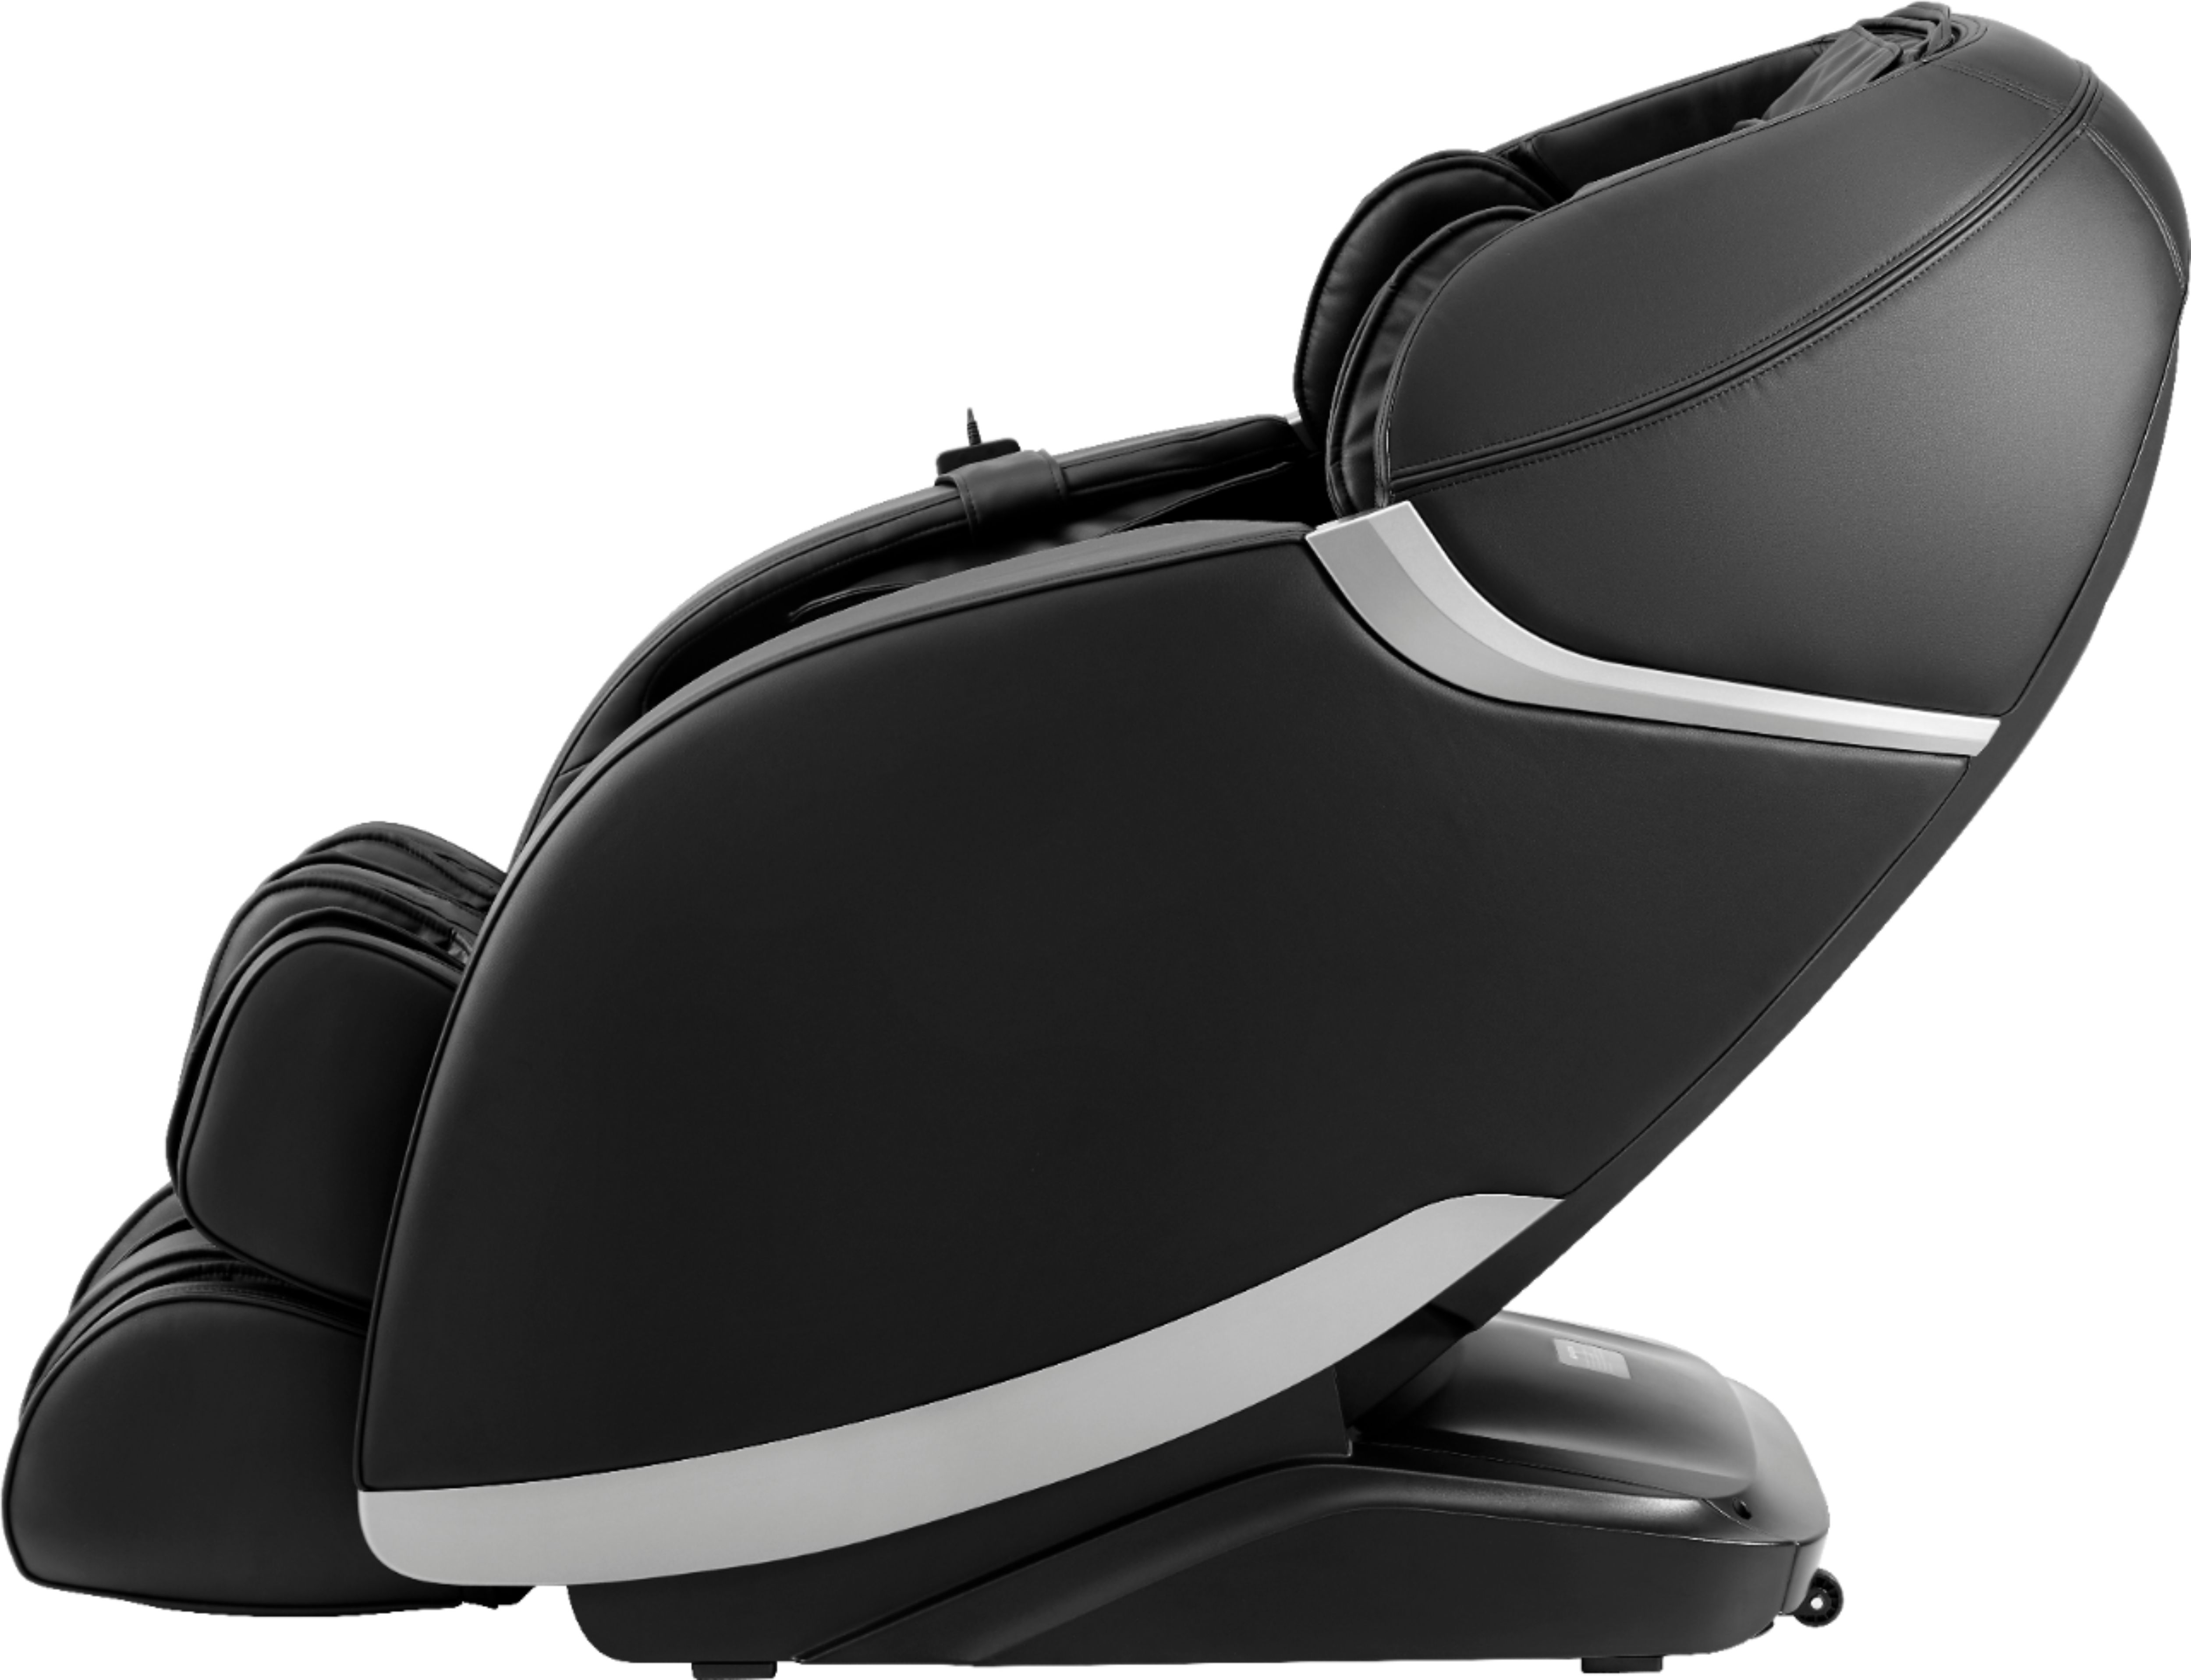 Insignia™ 2d Zero Gravity Full Body Massage Chair Black With Silver